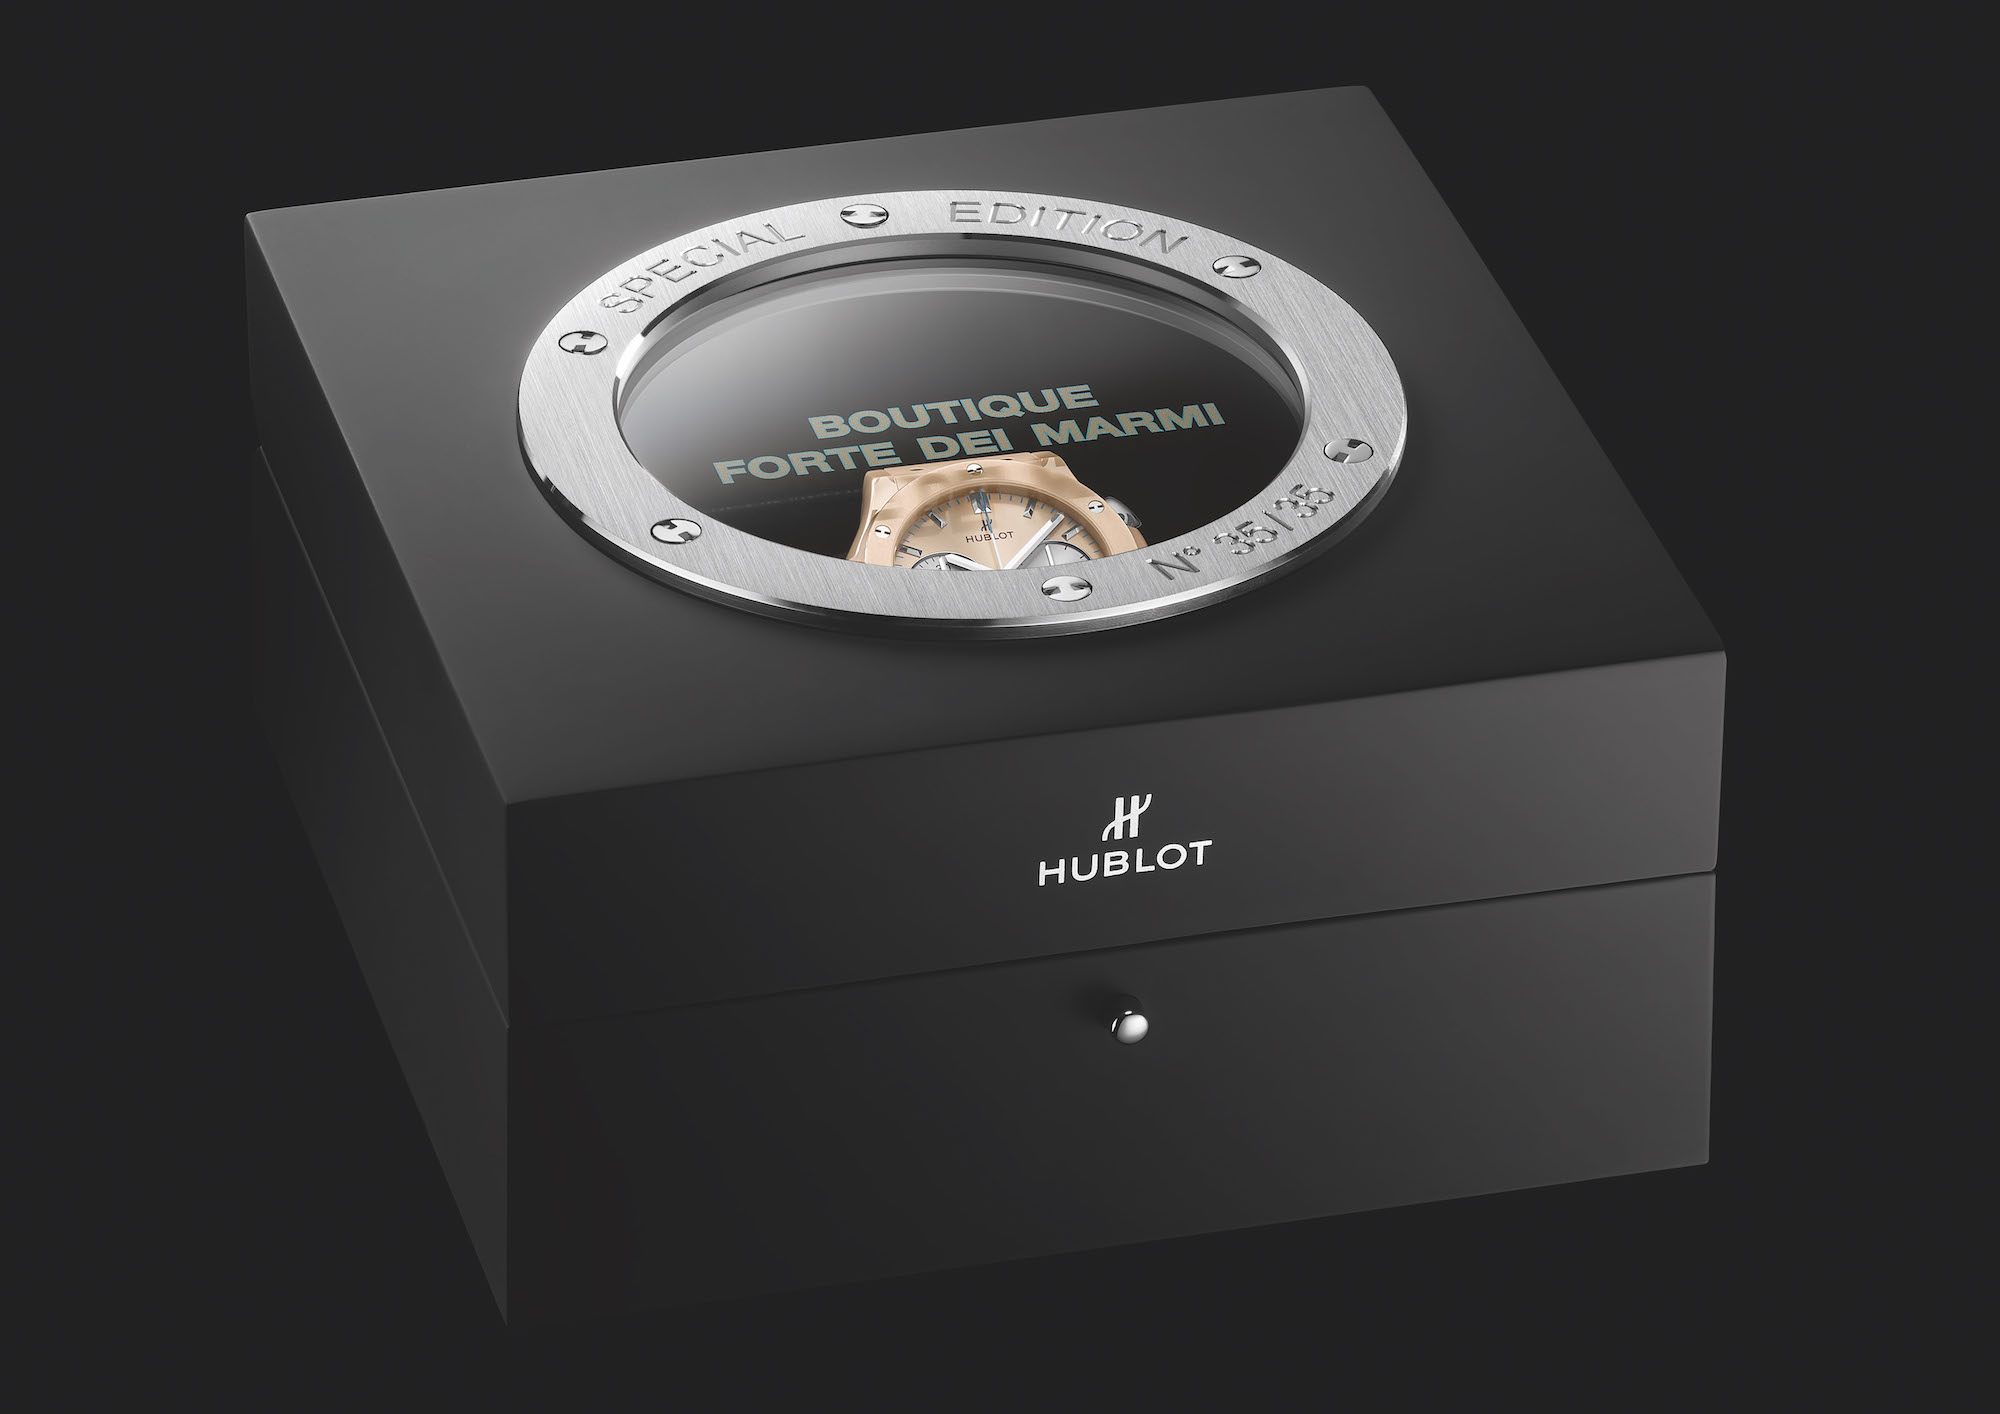 Hublot Classic Fusion Chronograph Boutique Forte dei Marmi 521.CZ.892B.RX.BHF21 Estuche detalle